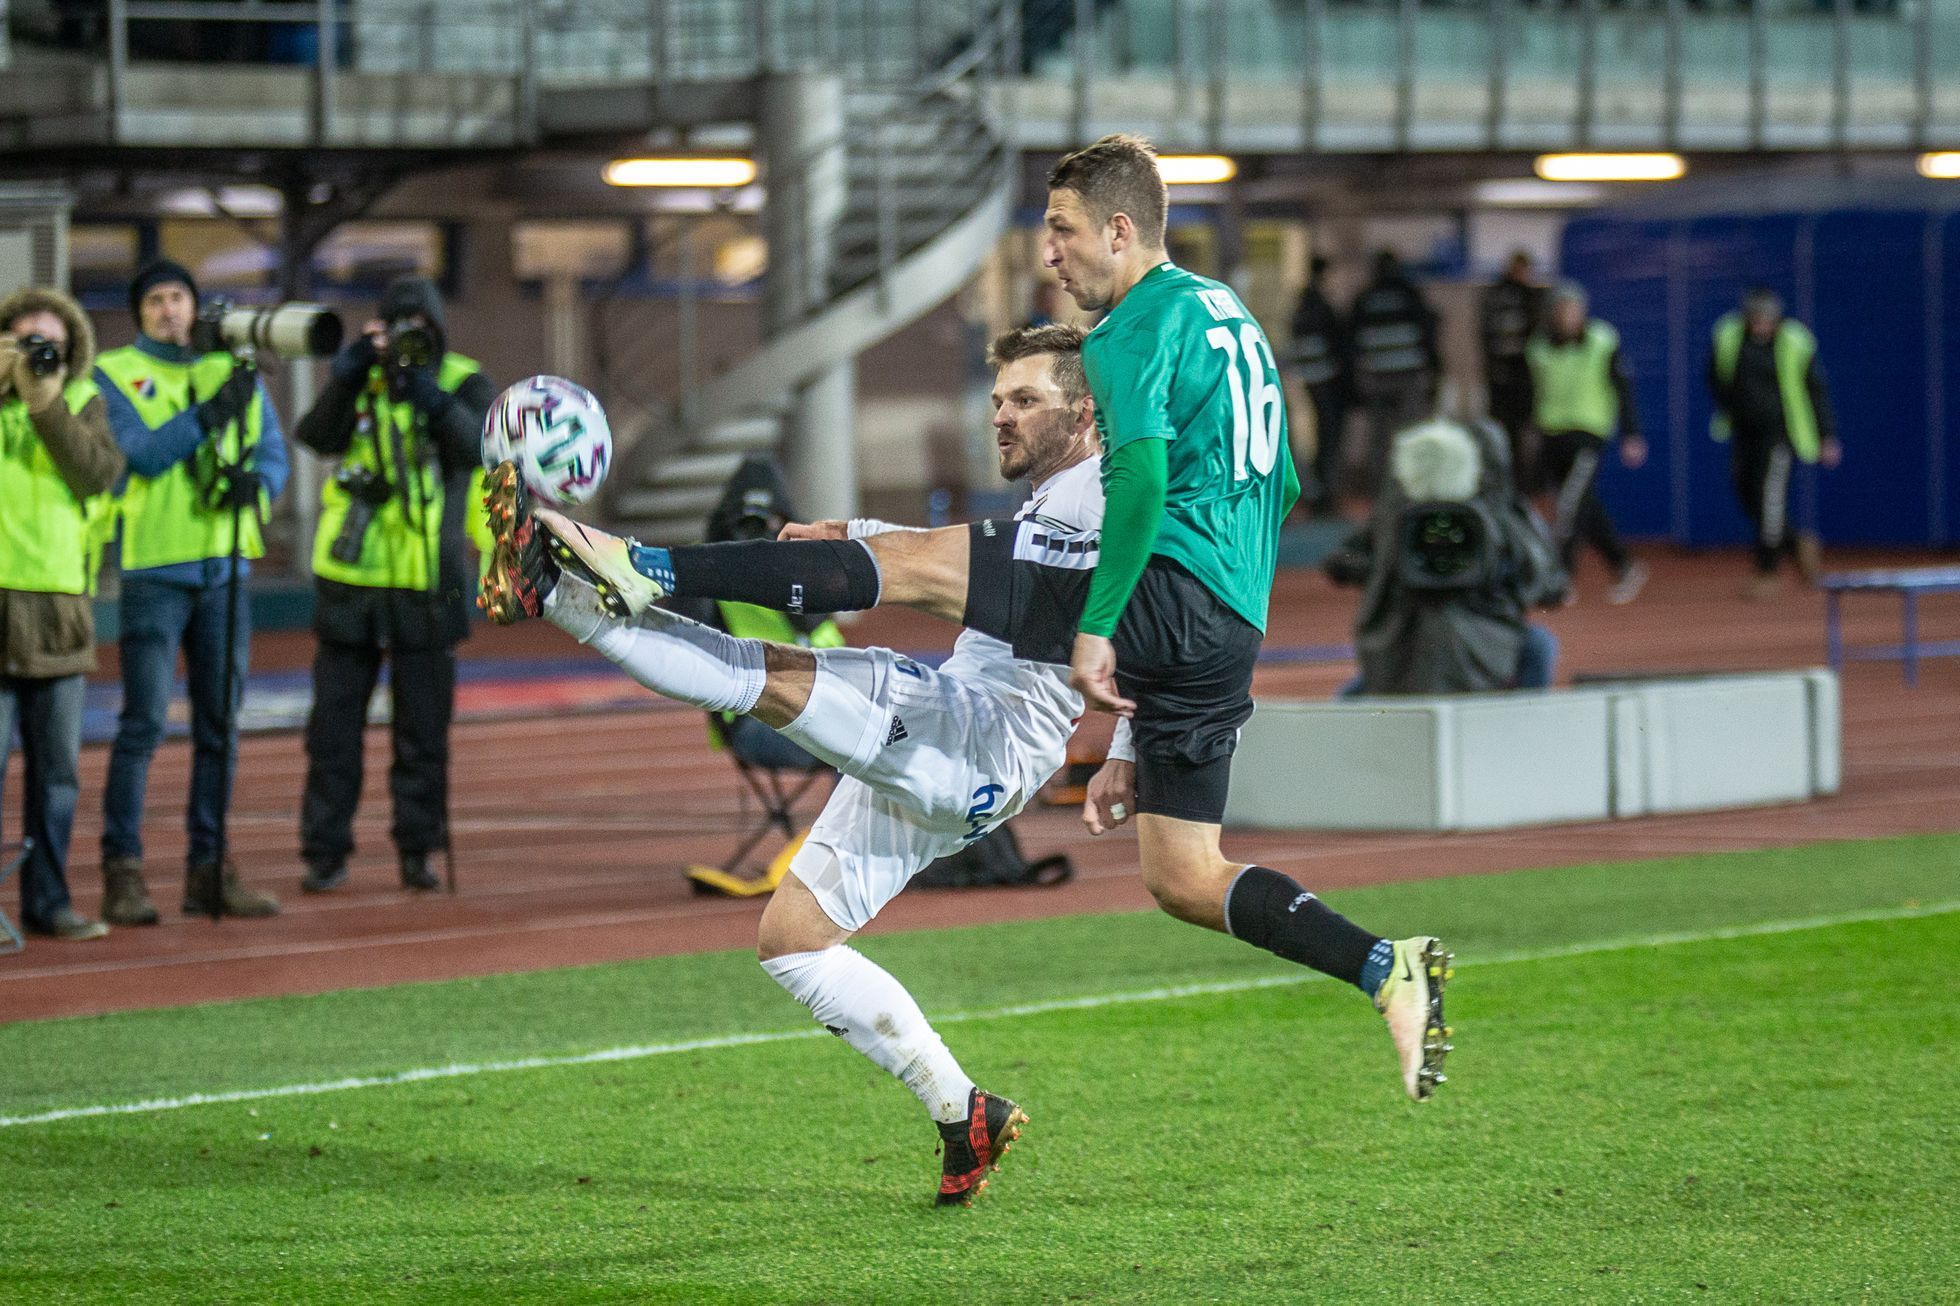 Fortuna:Liga 2019/20, Ostrava - Jablonec